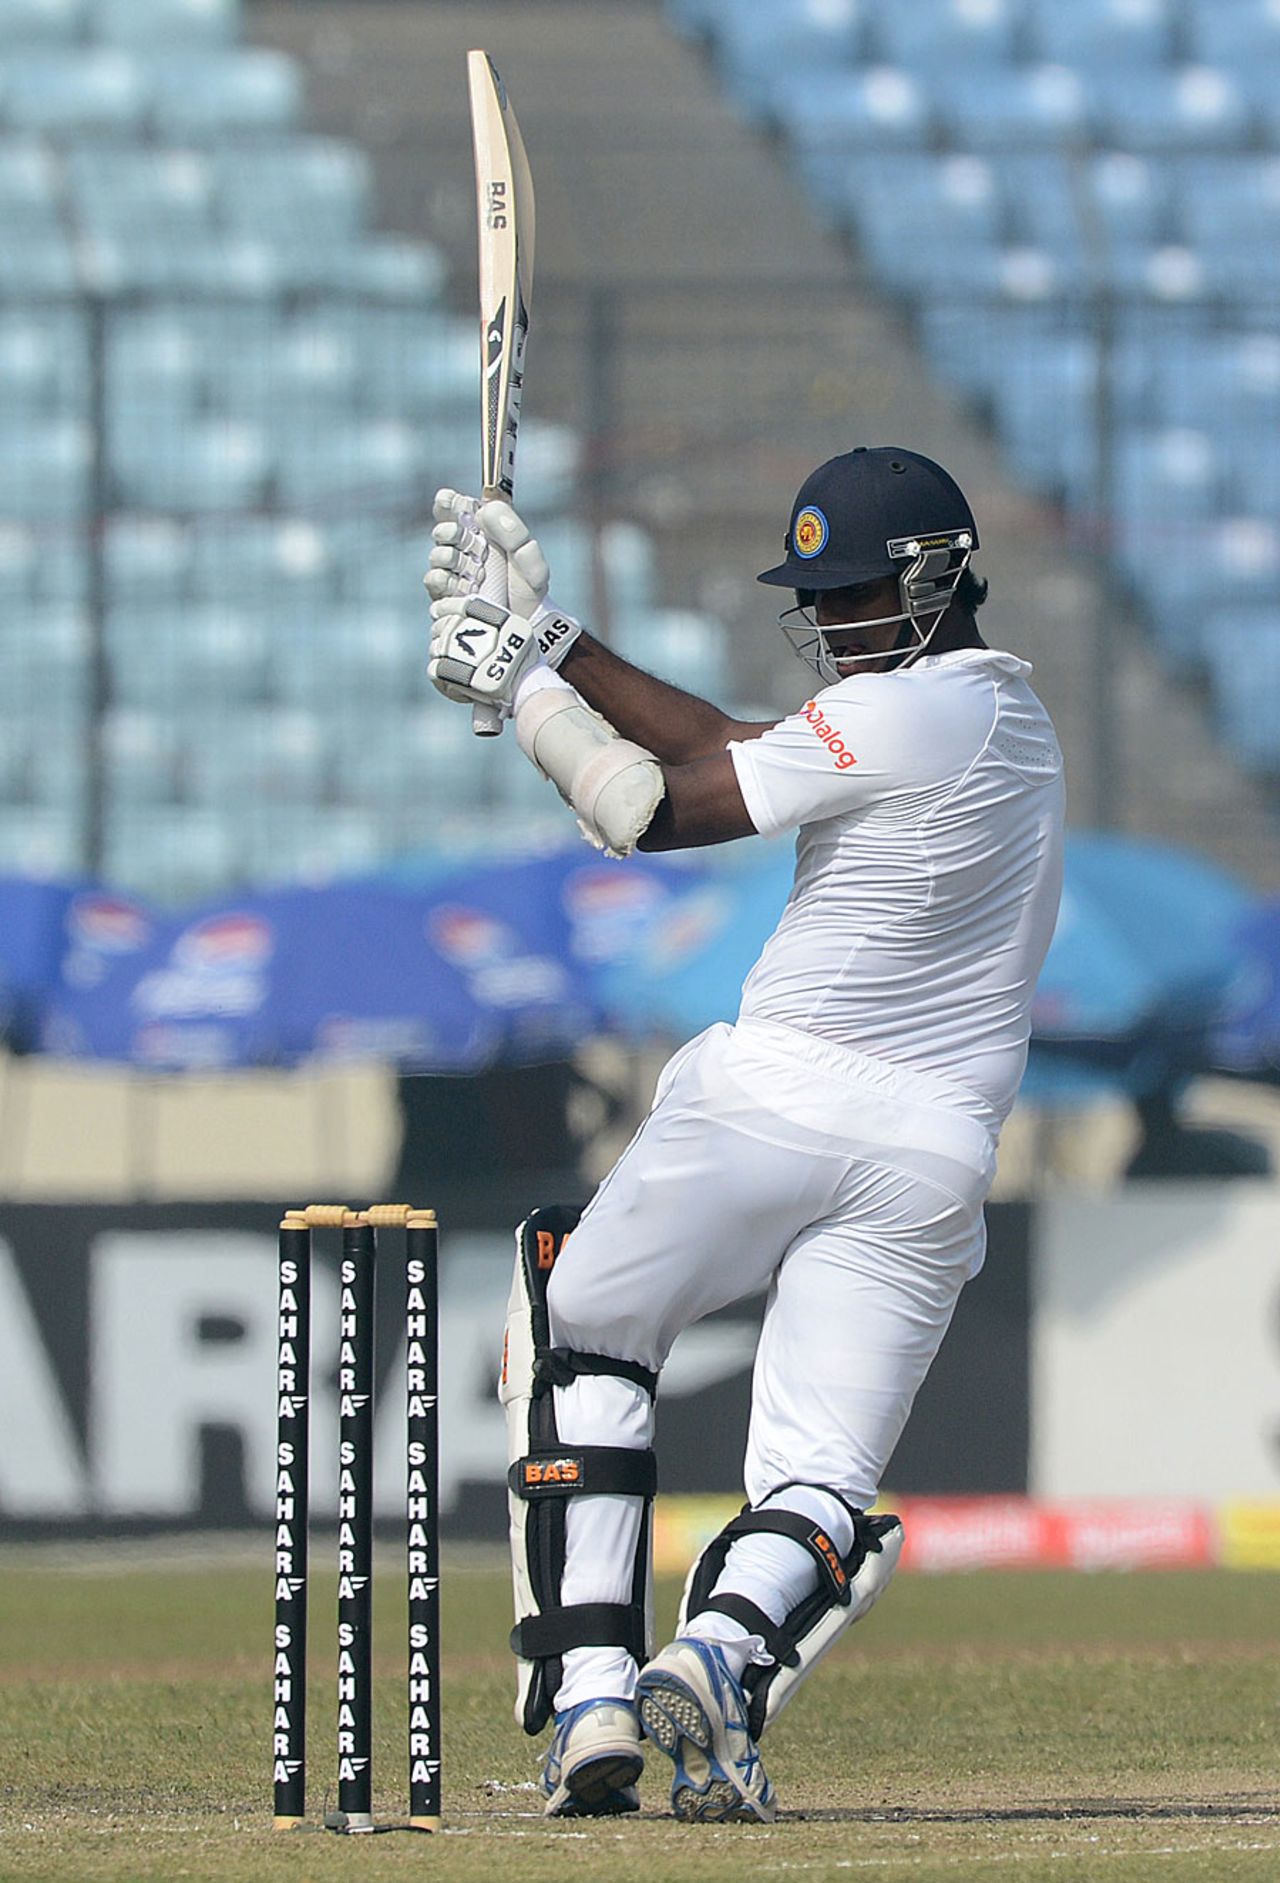 Angelo Mathews pulls one to fine leg, Bangladesh v Sri Lanka, 1st Test, Mirpur, 3rd day, January 29, 2014